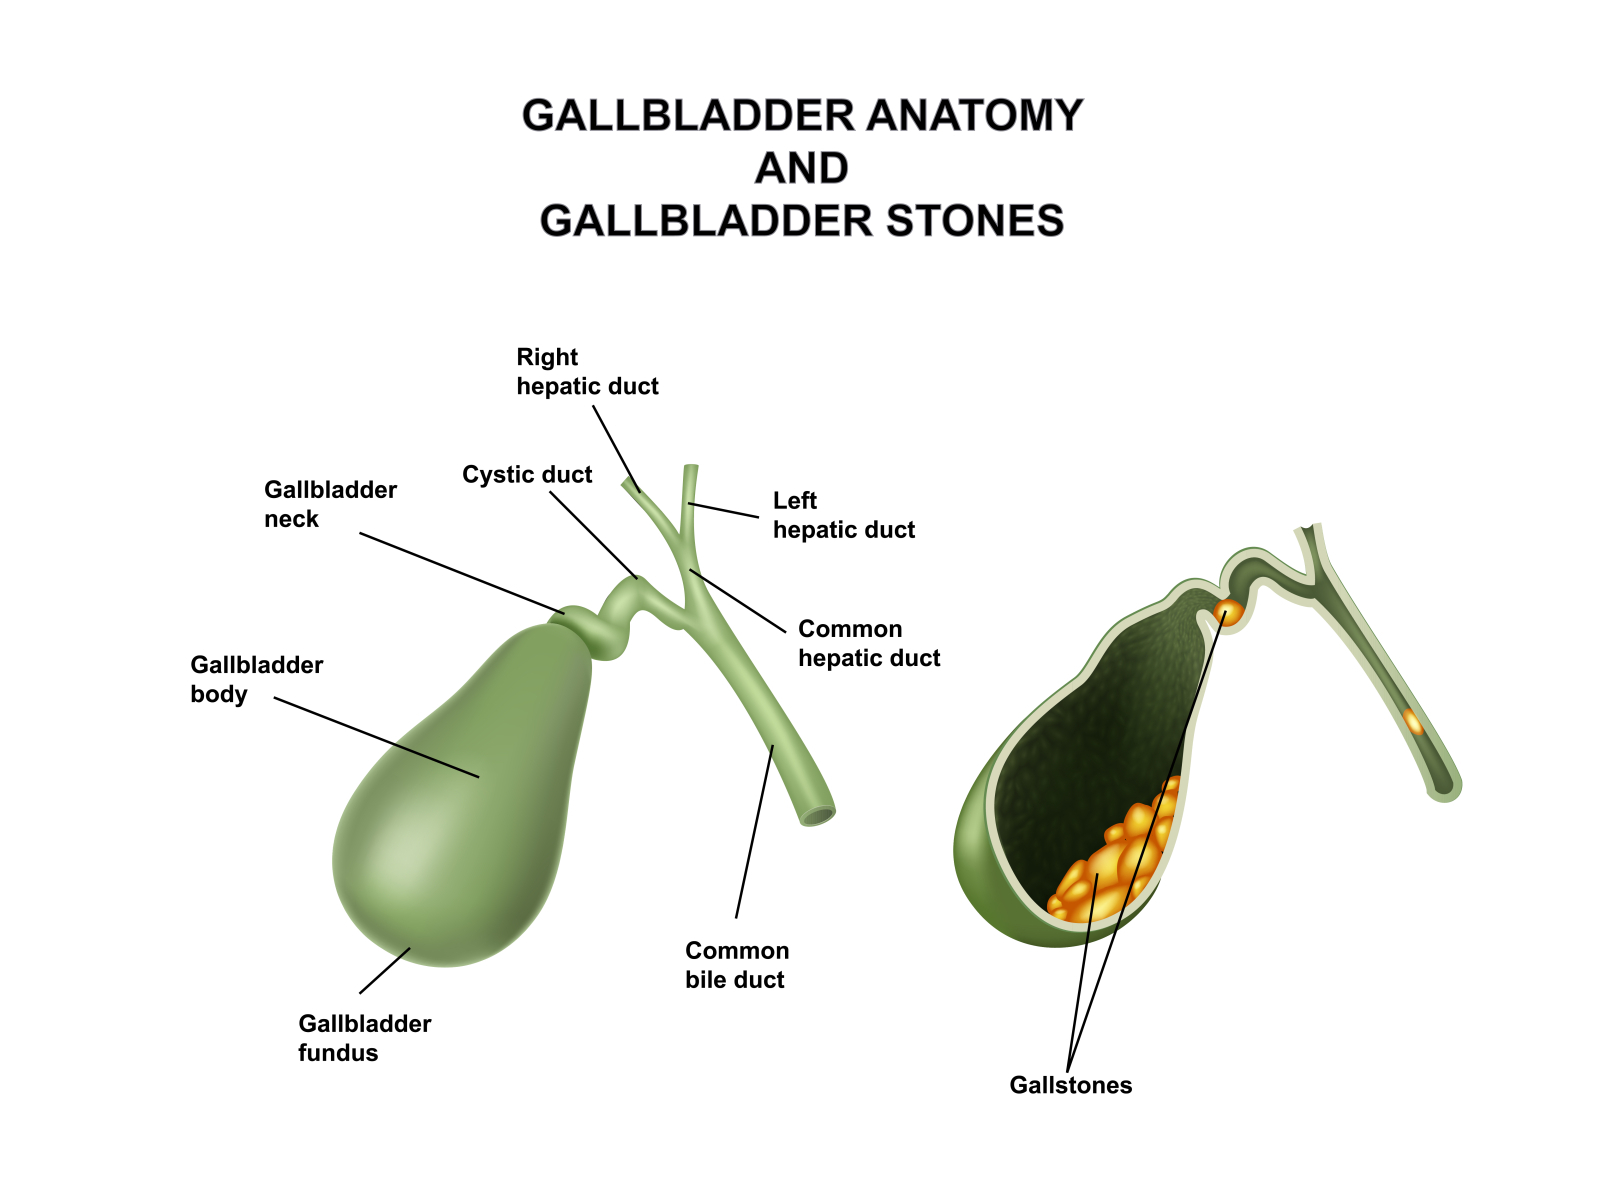 [DIAGRAM] Diagrams Of Gallbladder - MYDIAGRAM.ONLINE